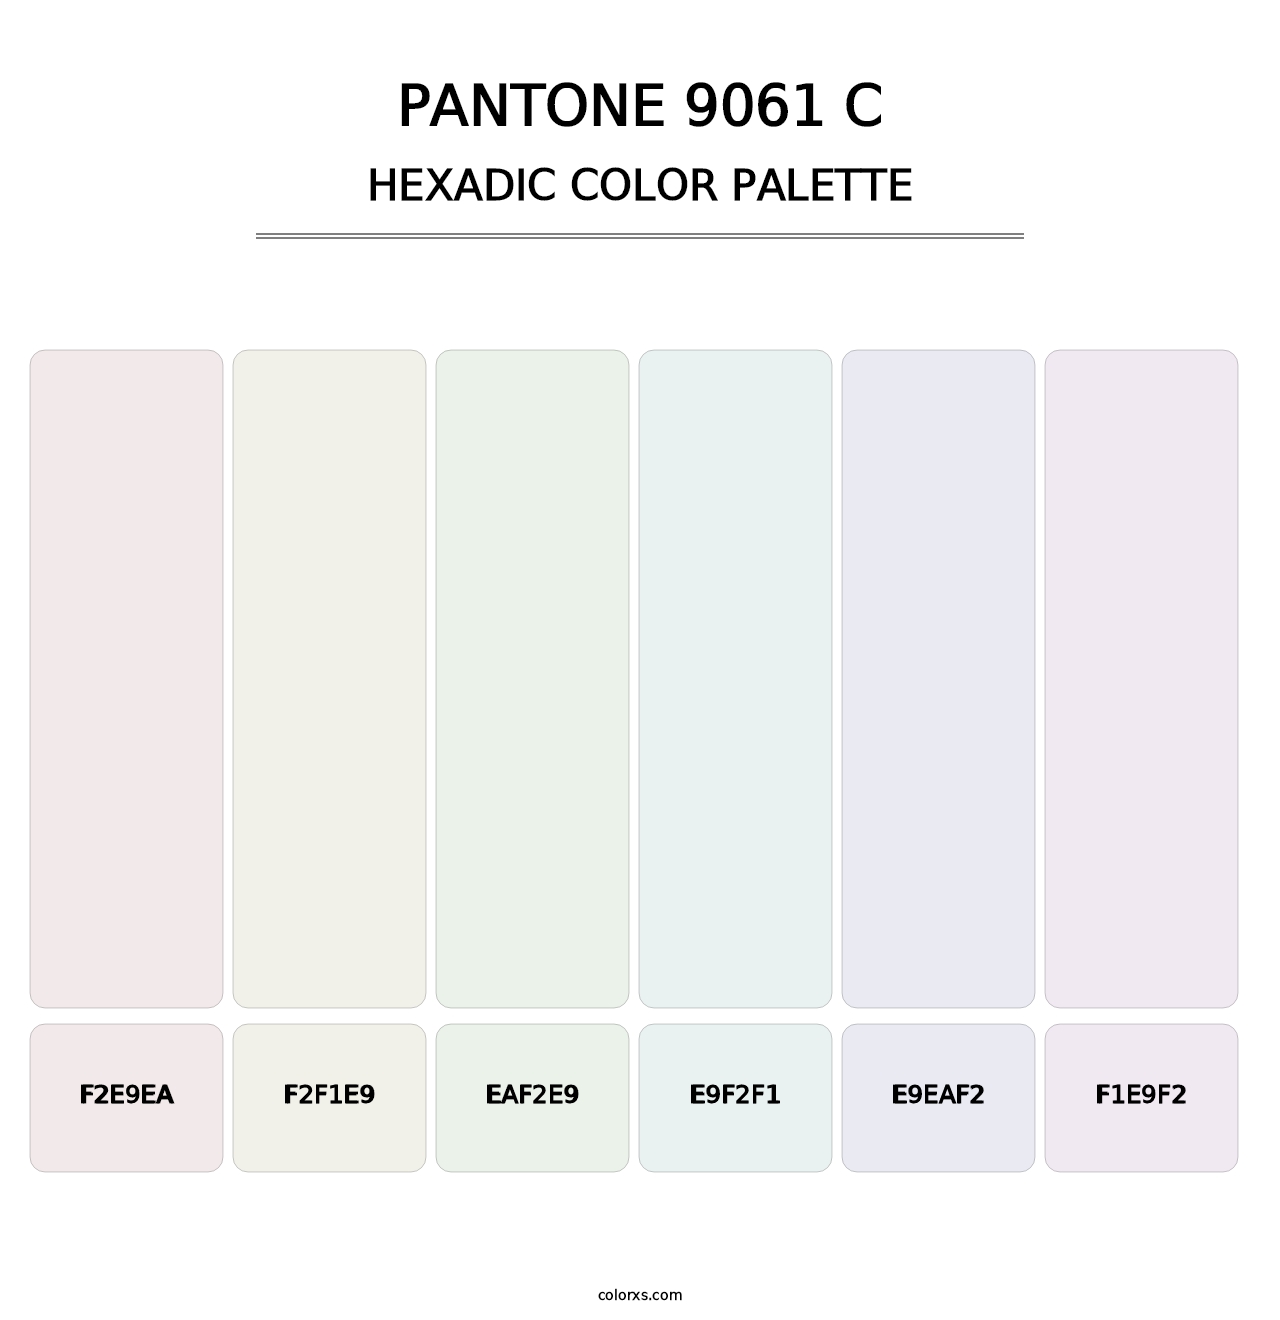 PANTONE 9061 C - Hexadic Color Palette